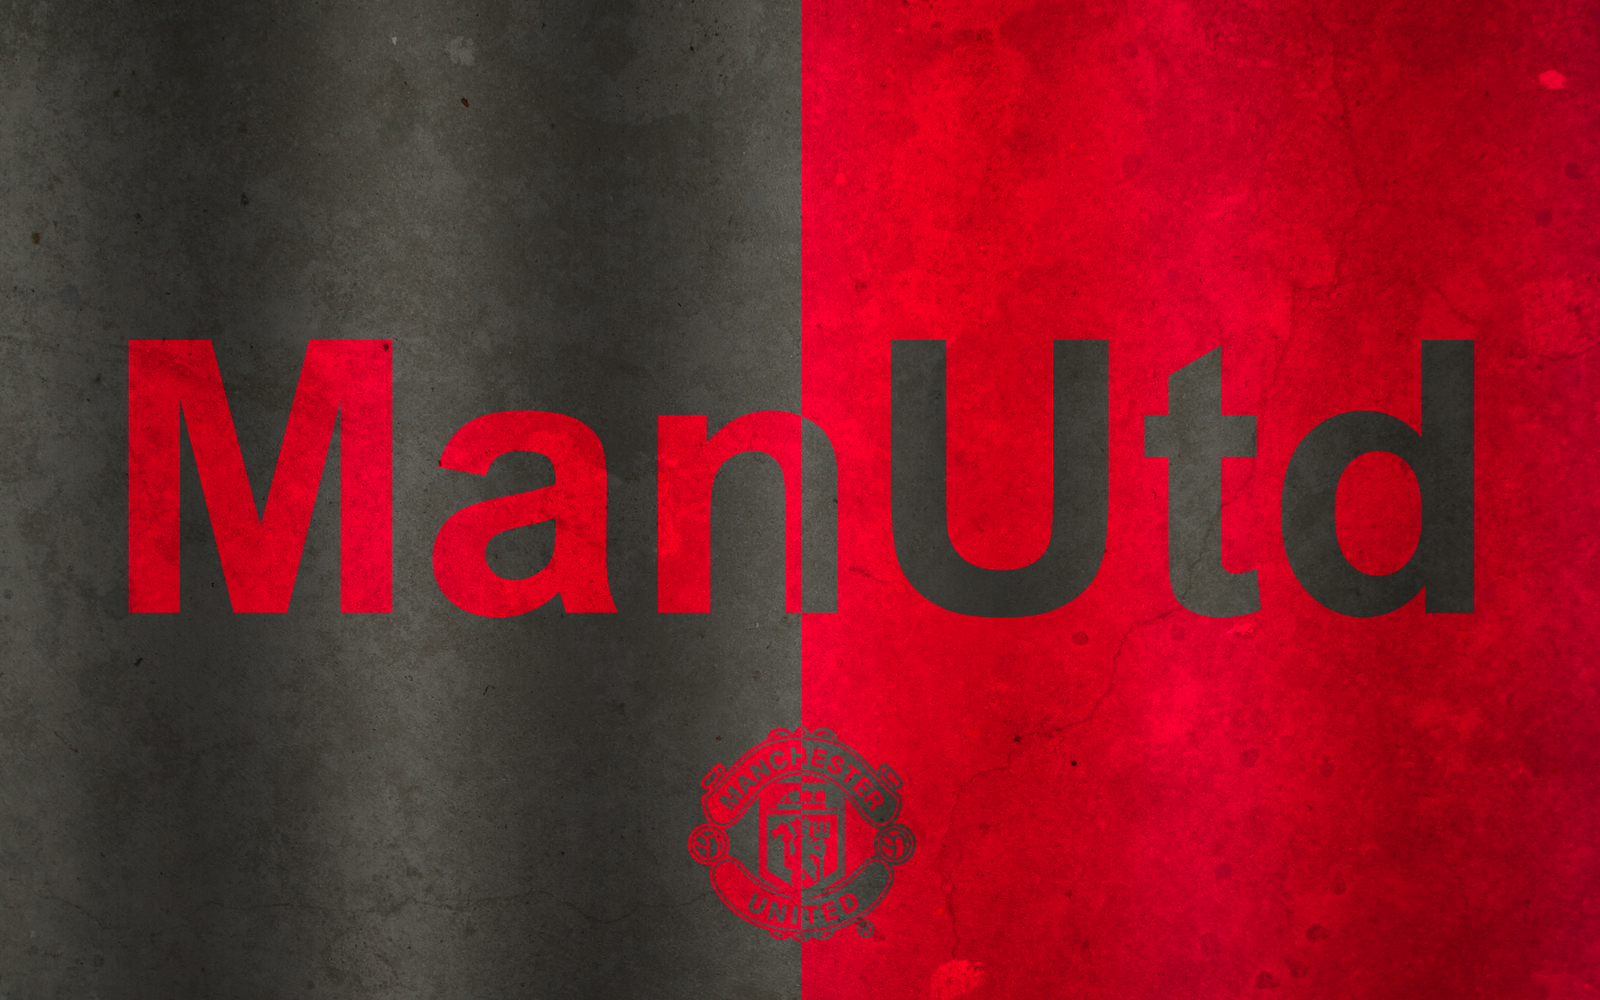 Man Utd Red Devil - HD Wallpaper 